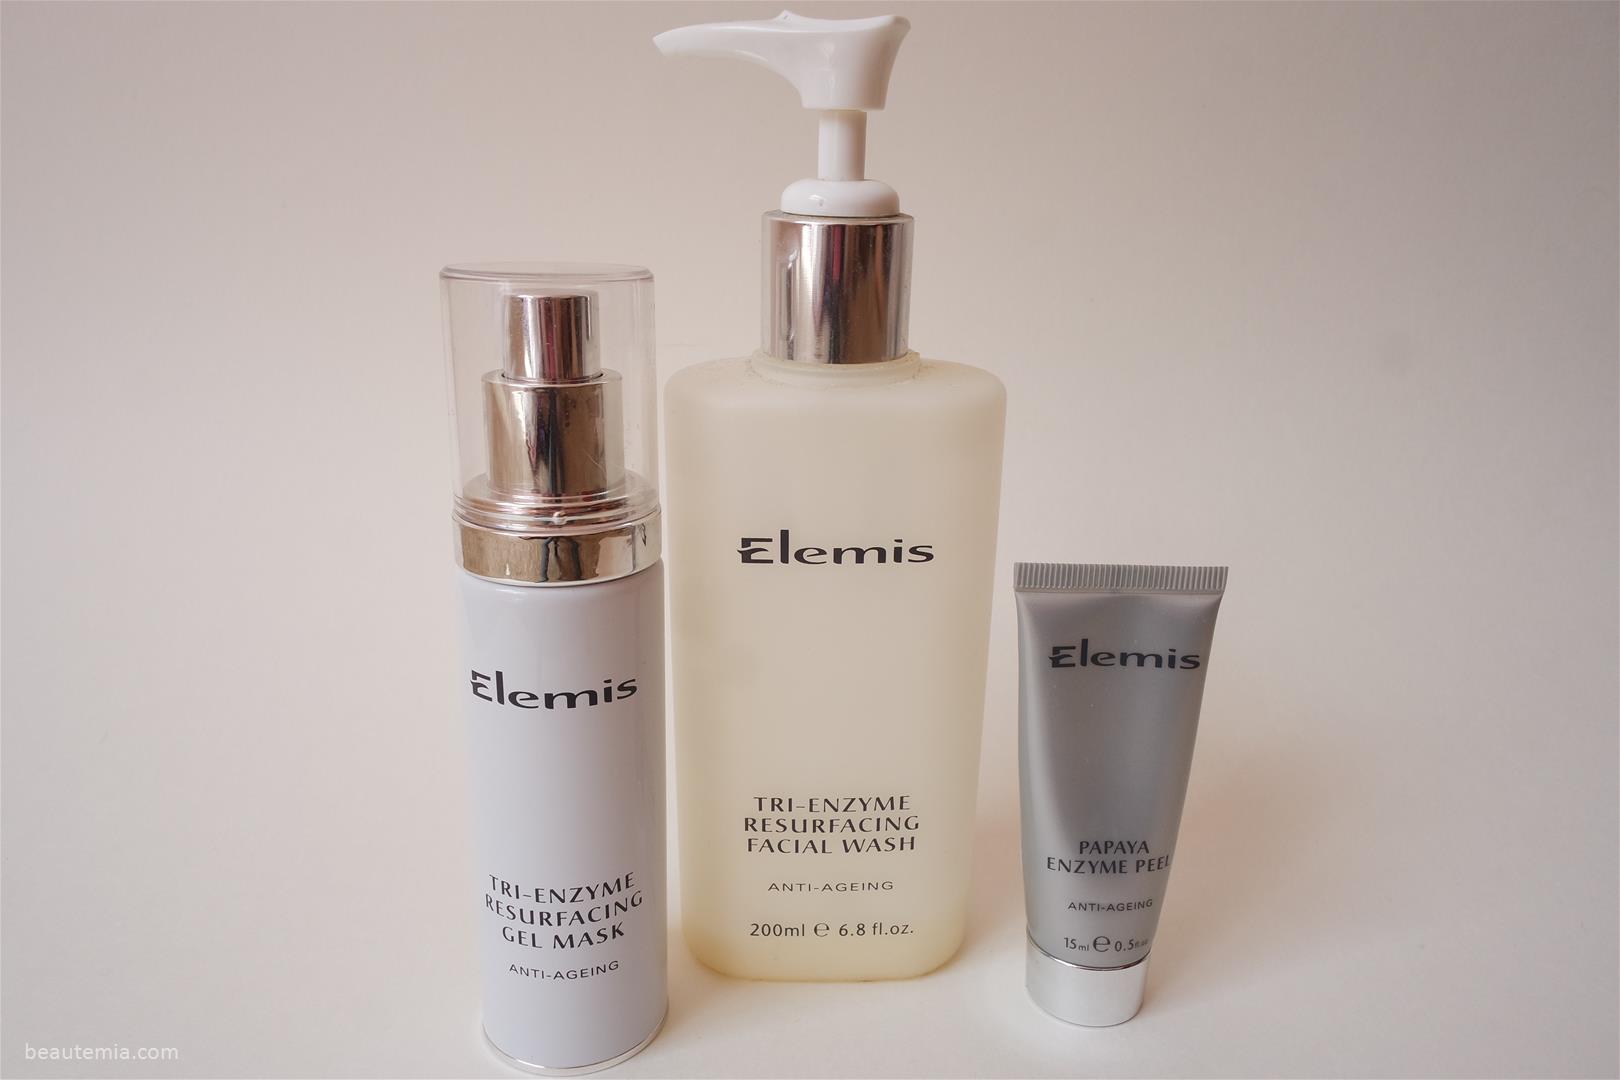 ELEMIS Review > Dynamic Resurfacing Facial Wash / Tri